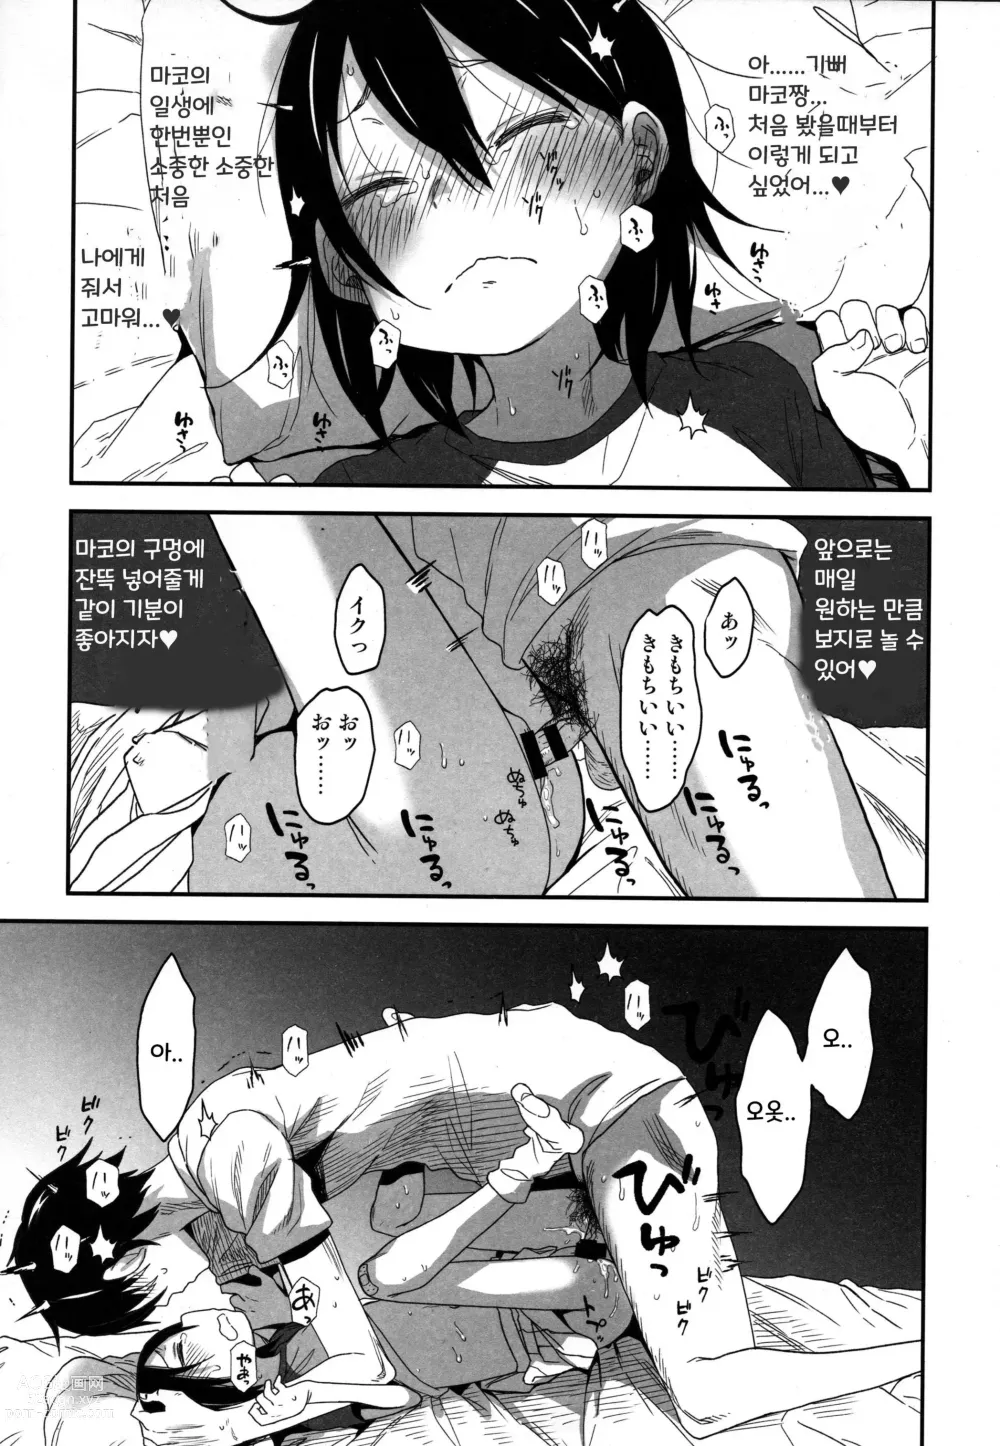 Page 7 of doujinshi Tonari no Mako-chan Vol. 3